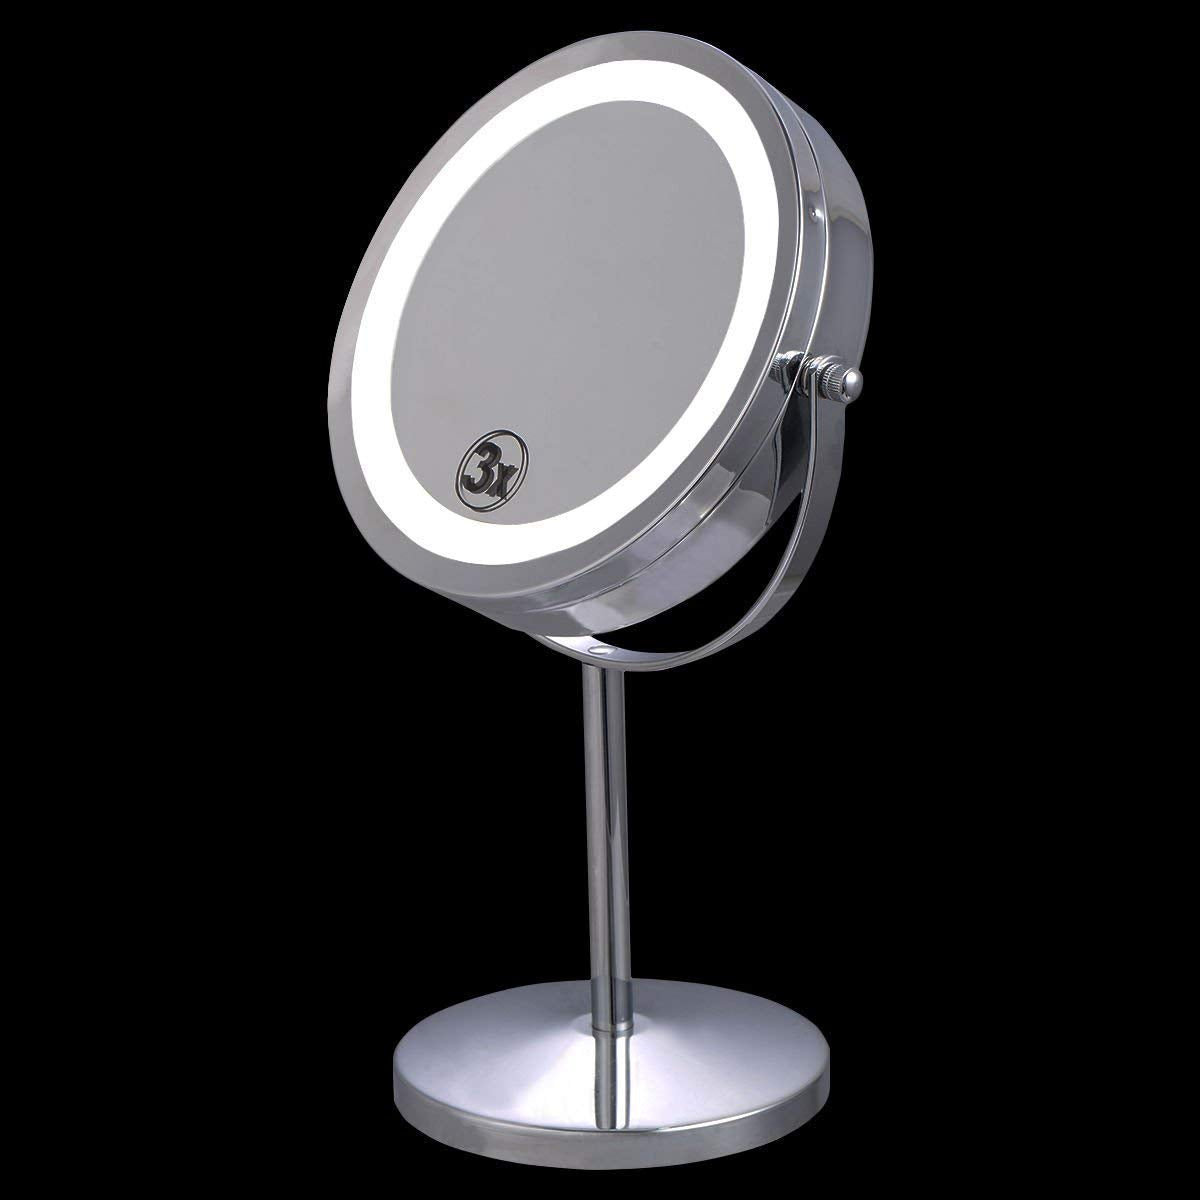 Giantex LED Lighted Makeup Mirror 5X Magnifying